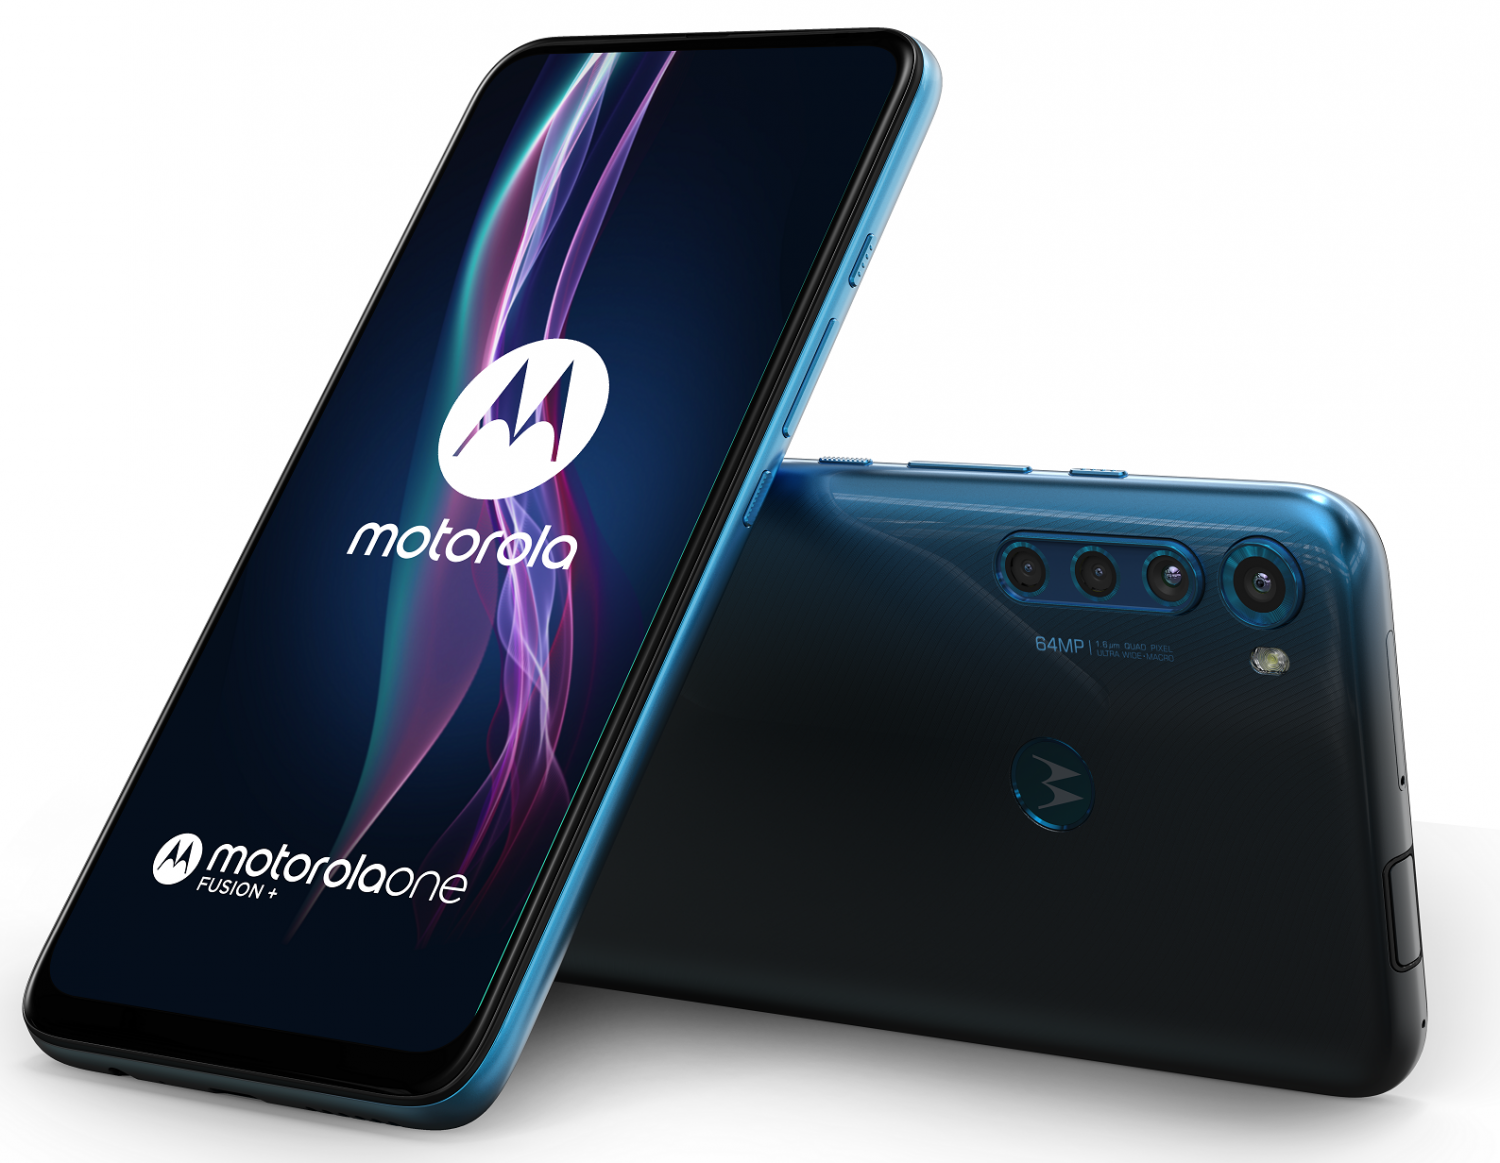 Motorola One Fusion+ 6GB/128GB Twilight Blue